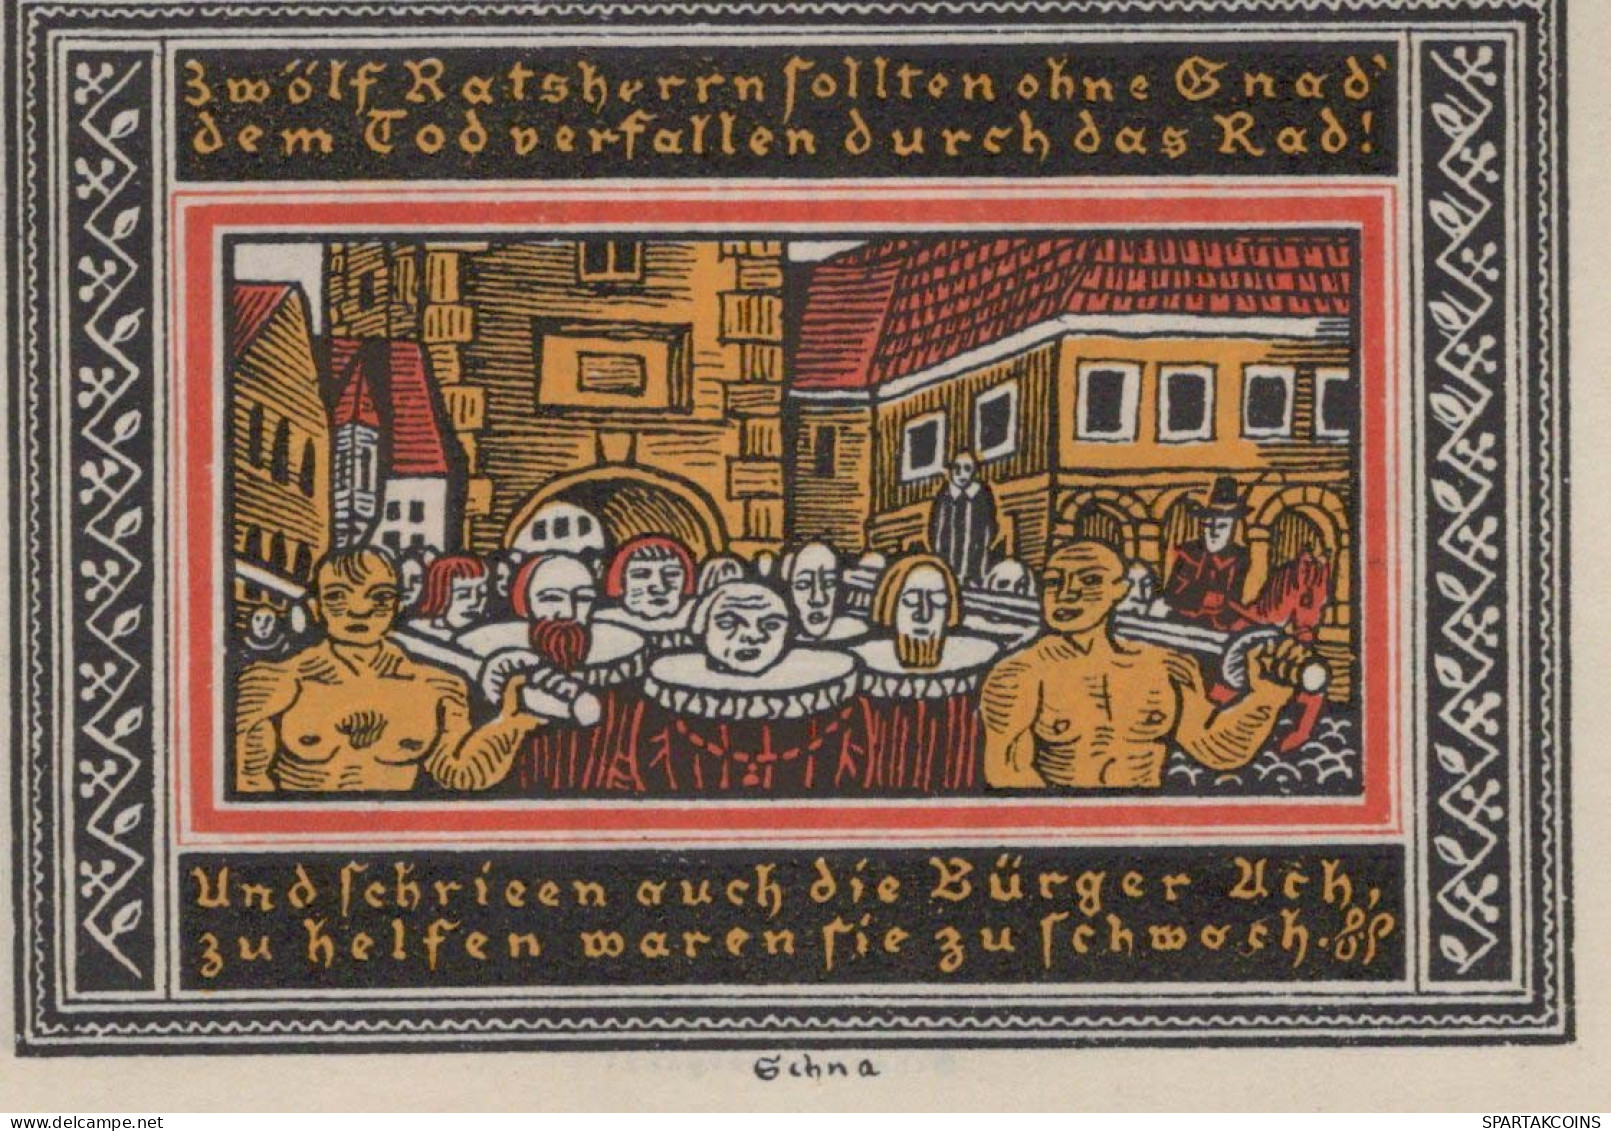 50 PFENNIG 1921 Stadt ETTLINGEN Baden UNC DEUTSCHLAND Notgeld Banknote #PB372 - [11] Local Banknote Issues